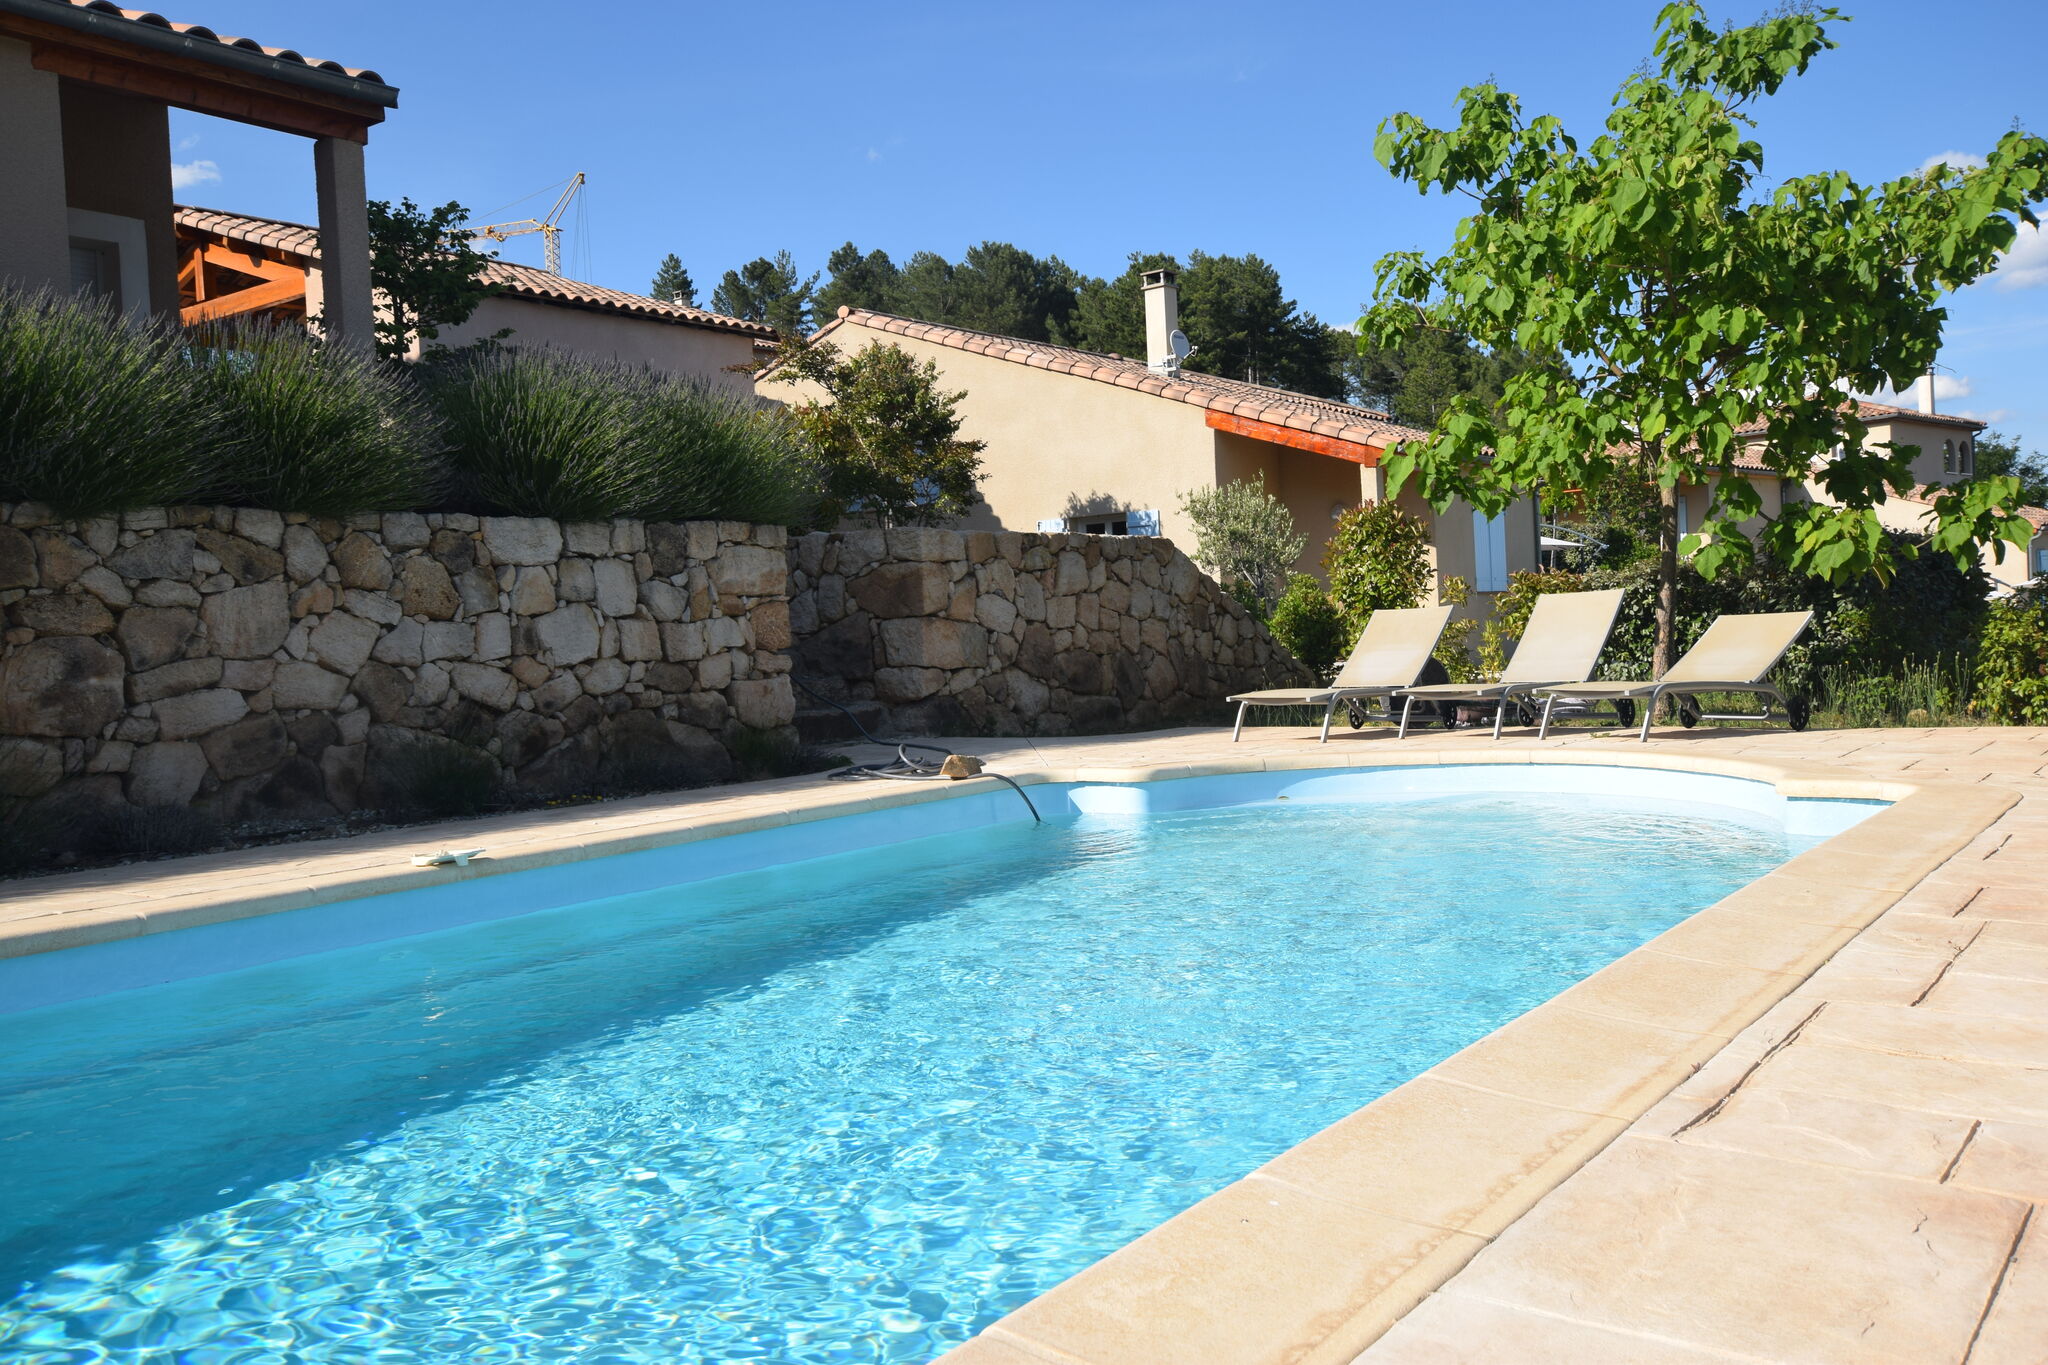 Moderne Villa in Joyeuse, Frankreich mit privatem Pool